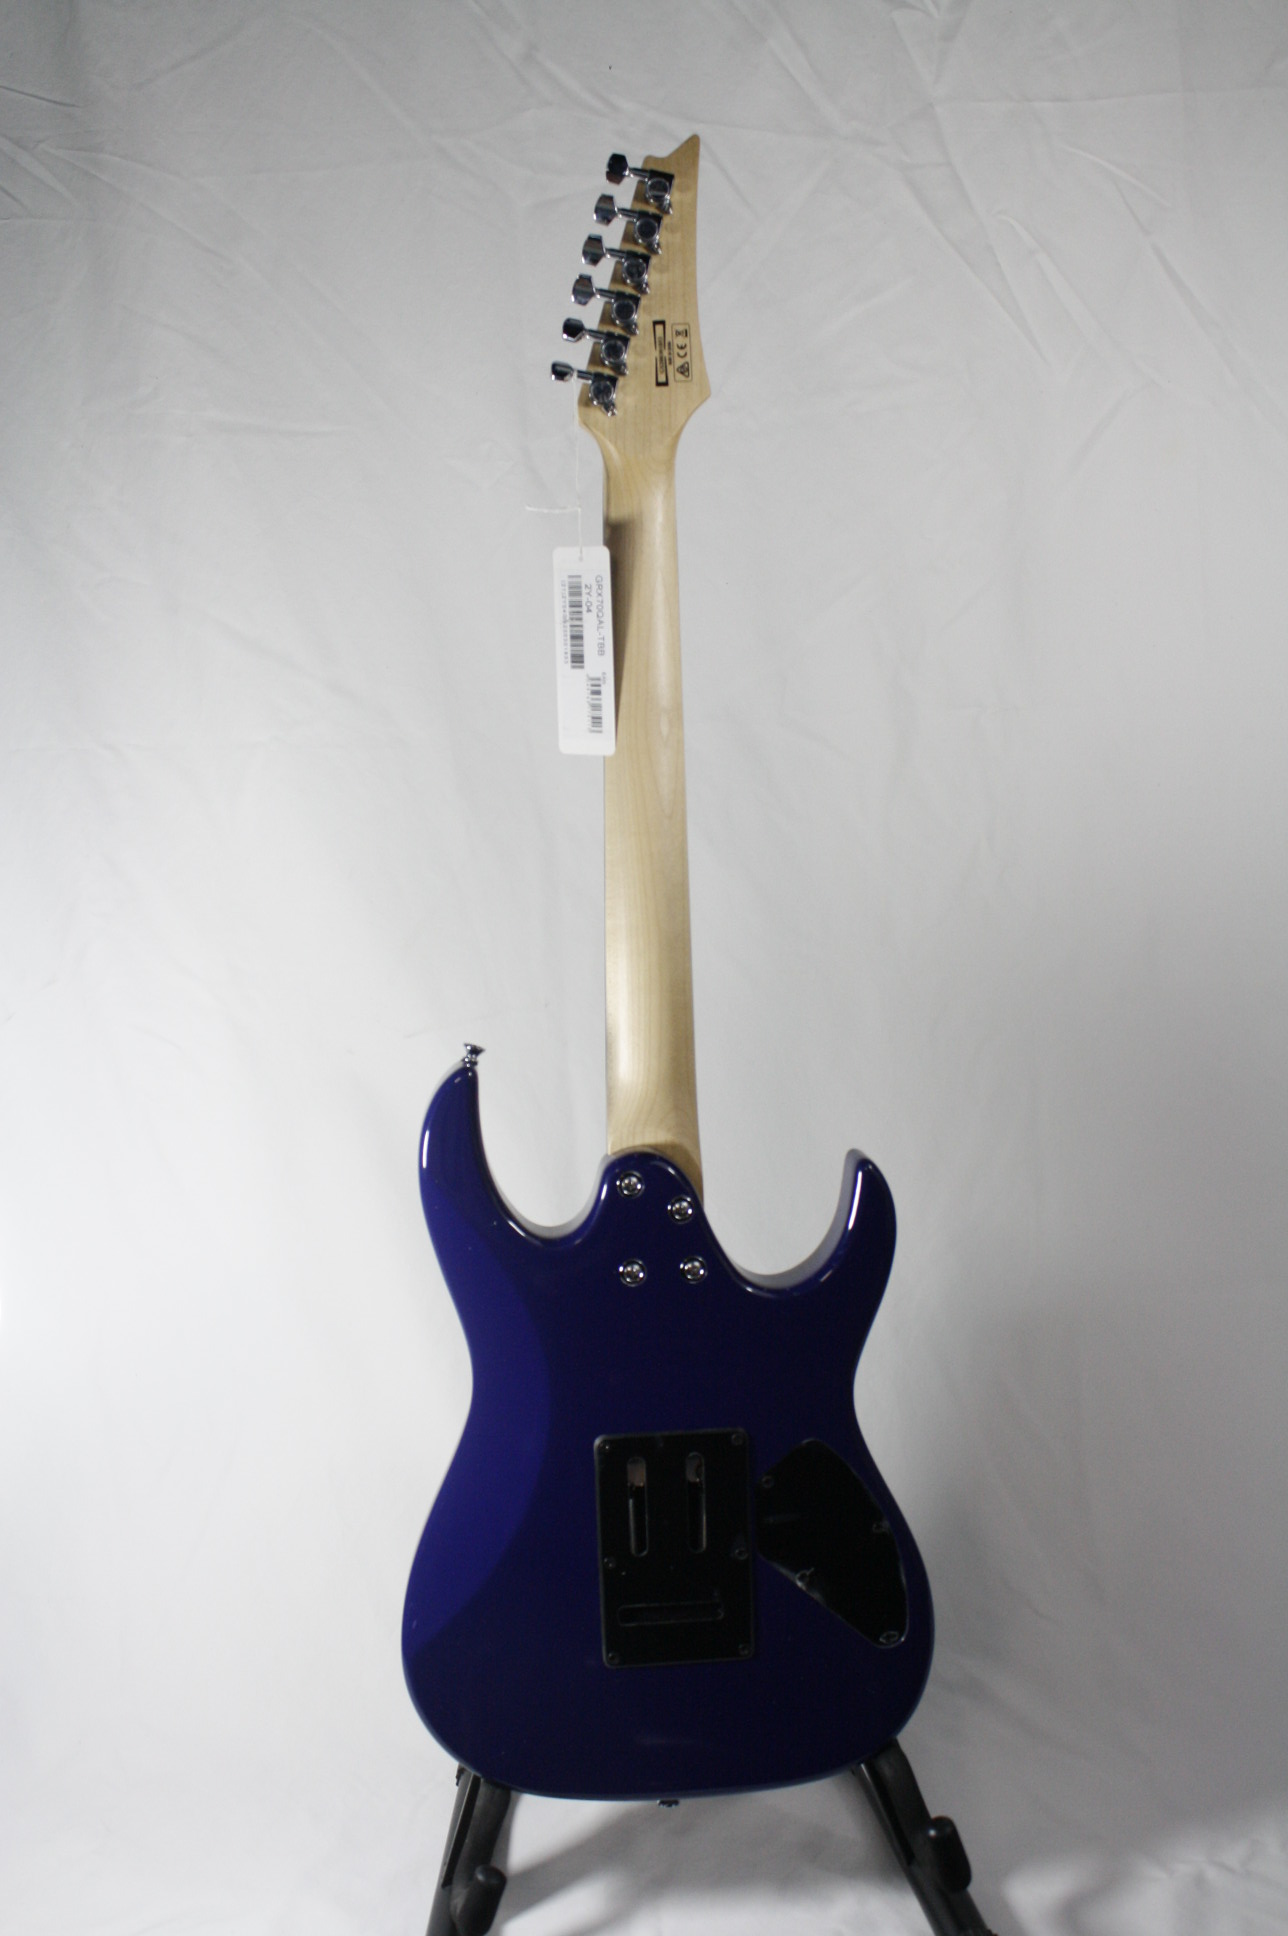 Ibanez GRX70QAL-TBB LEFT-HANDED 6-String Electric Guitar Transparent Blue Burst